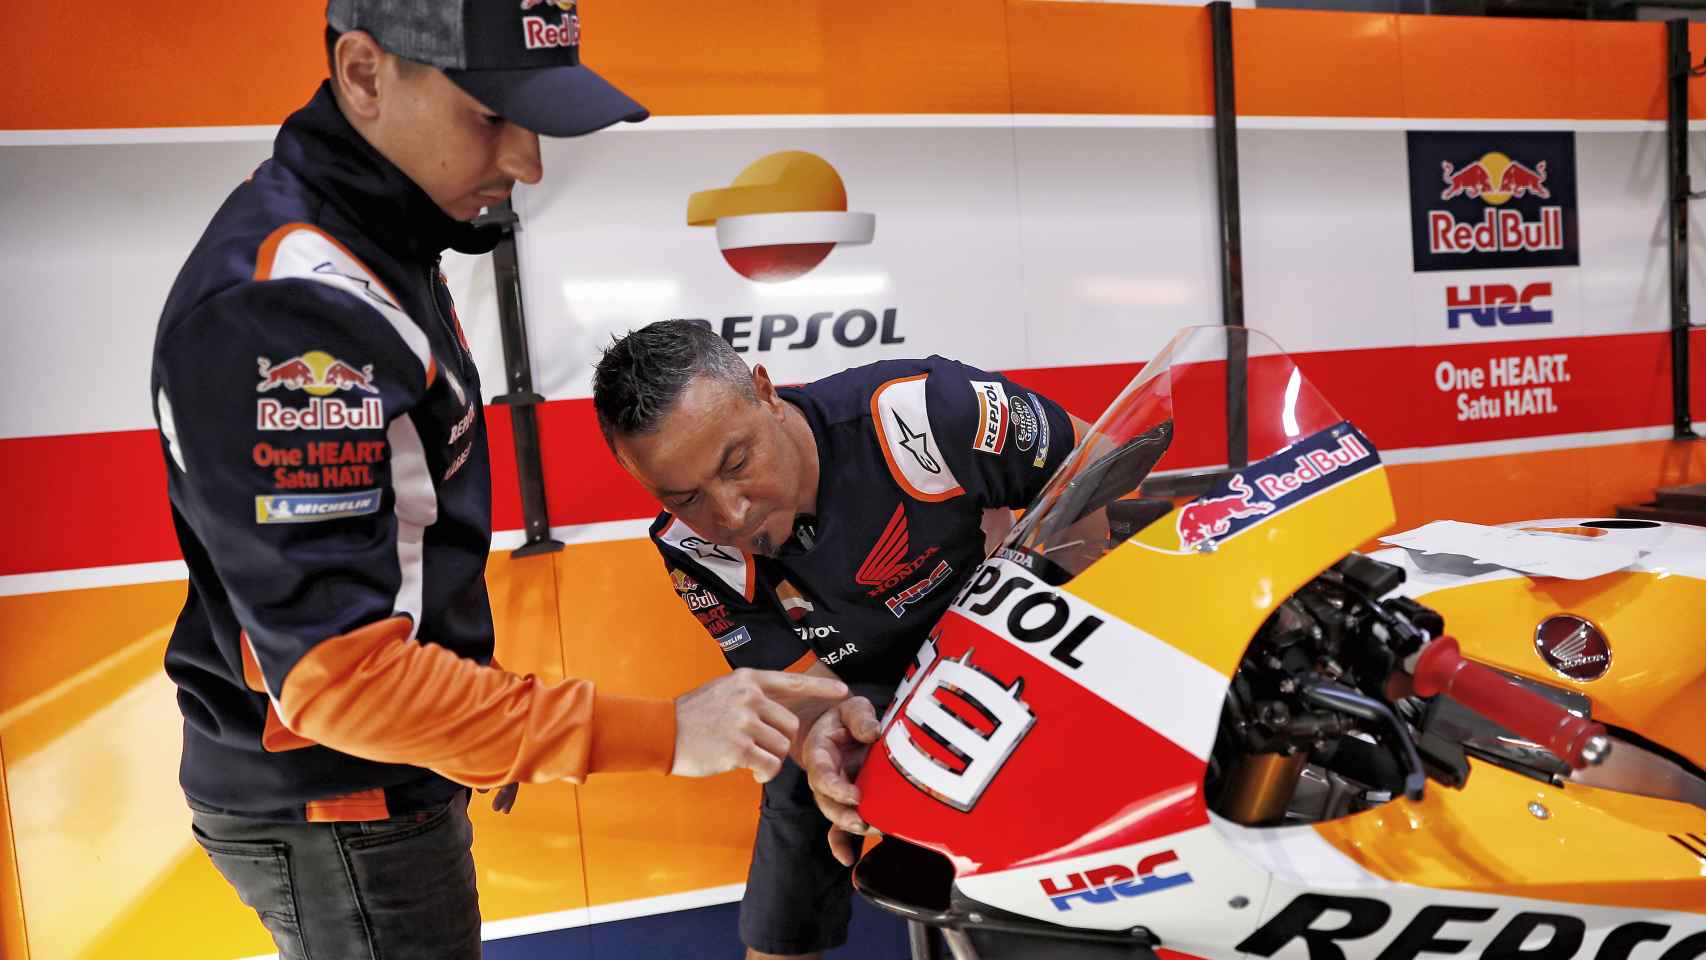 Juan Llansá, junto a Jorge Lorenzo, en el box del equipo Repsol Honda.